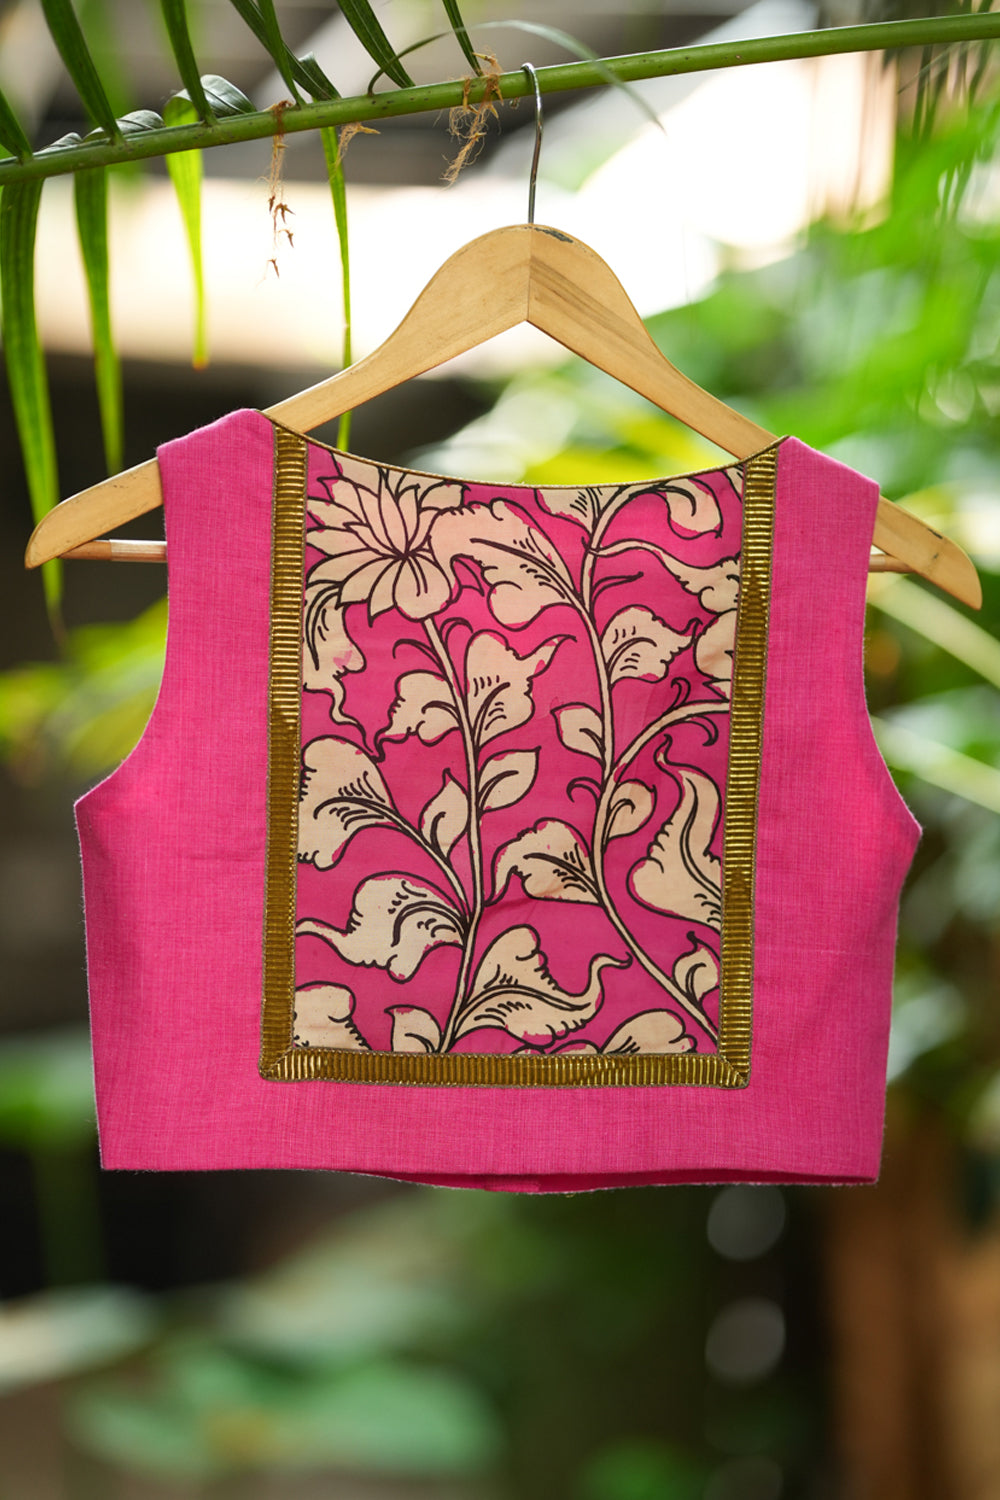 Persian pink handloom  sleeveless U neck blouse